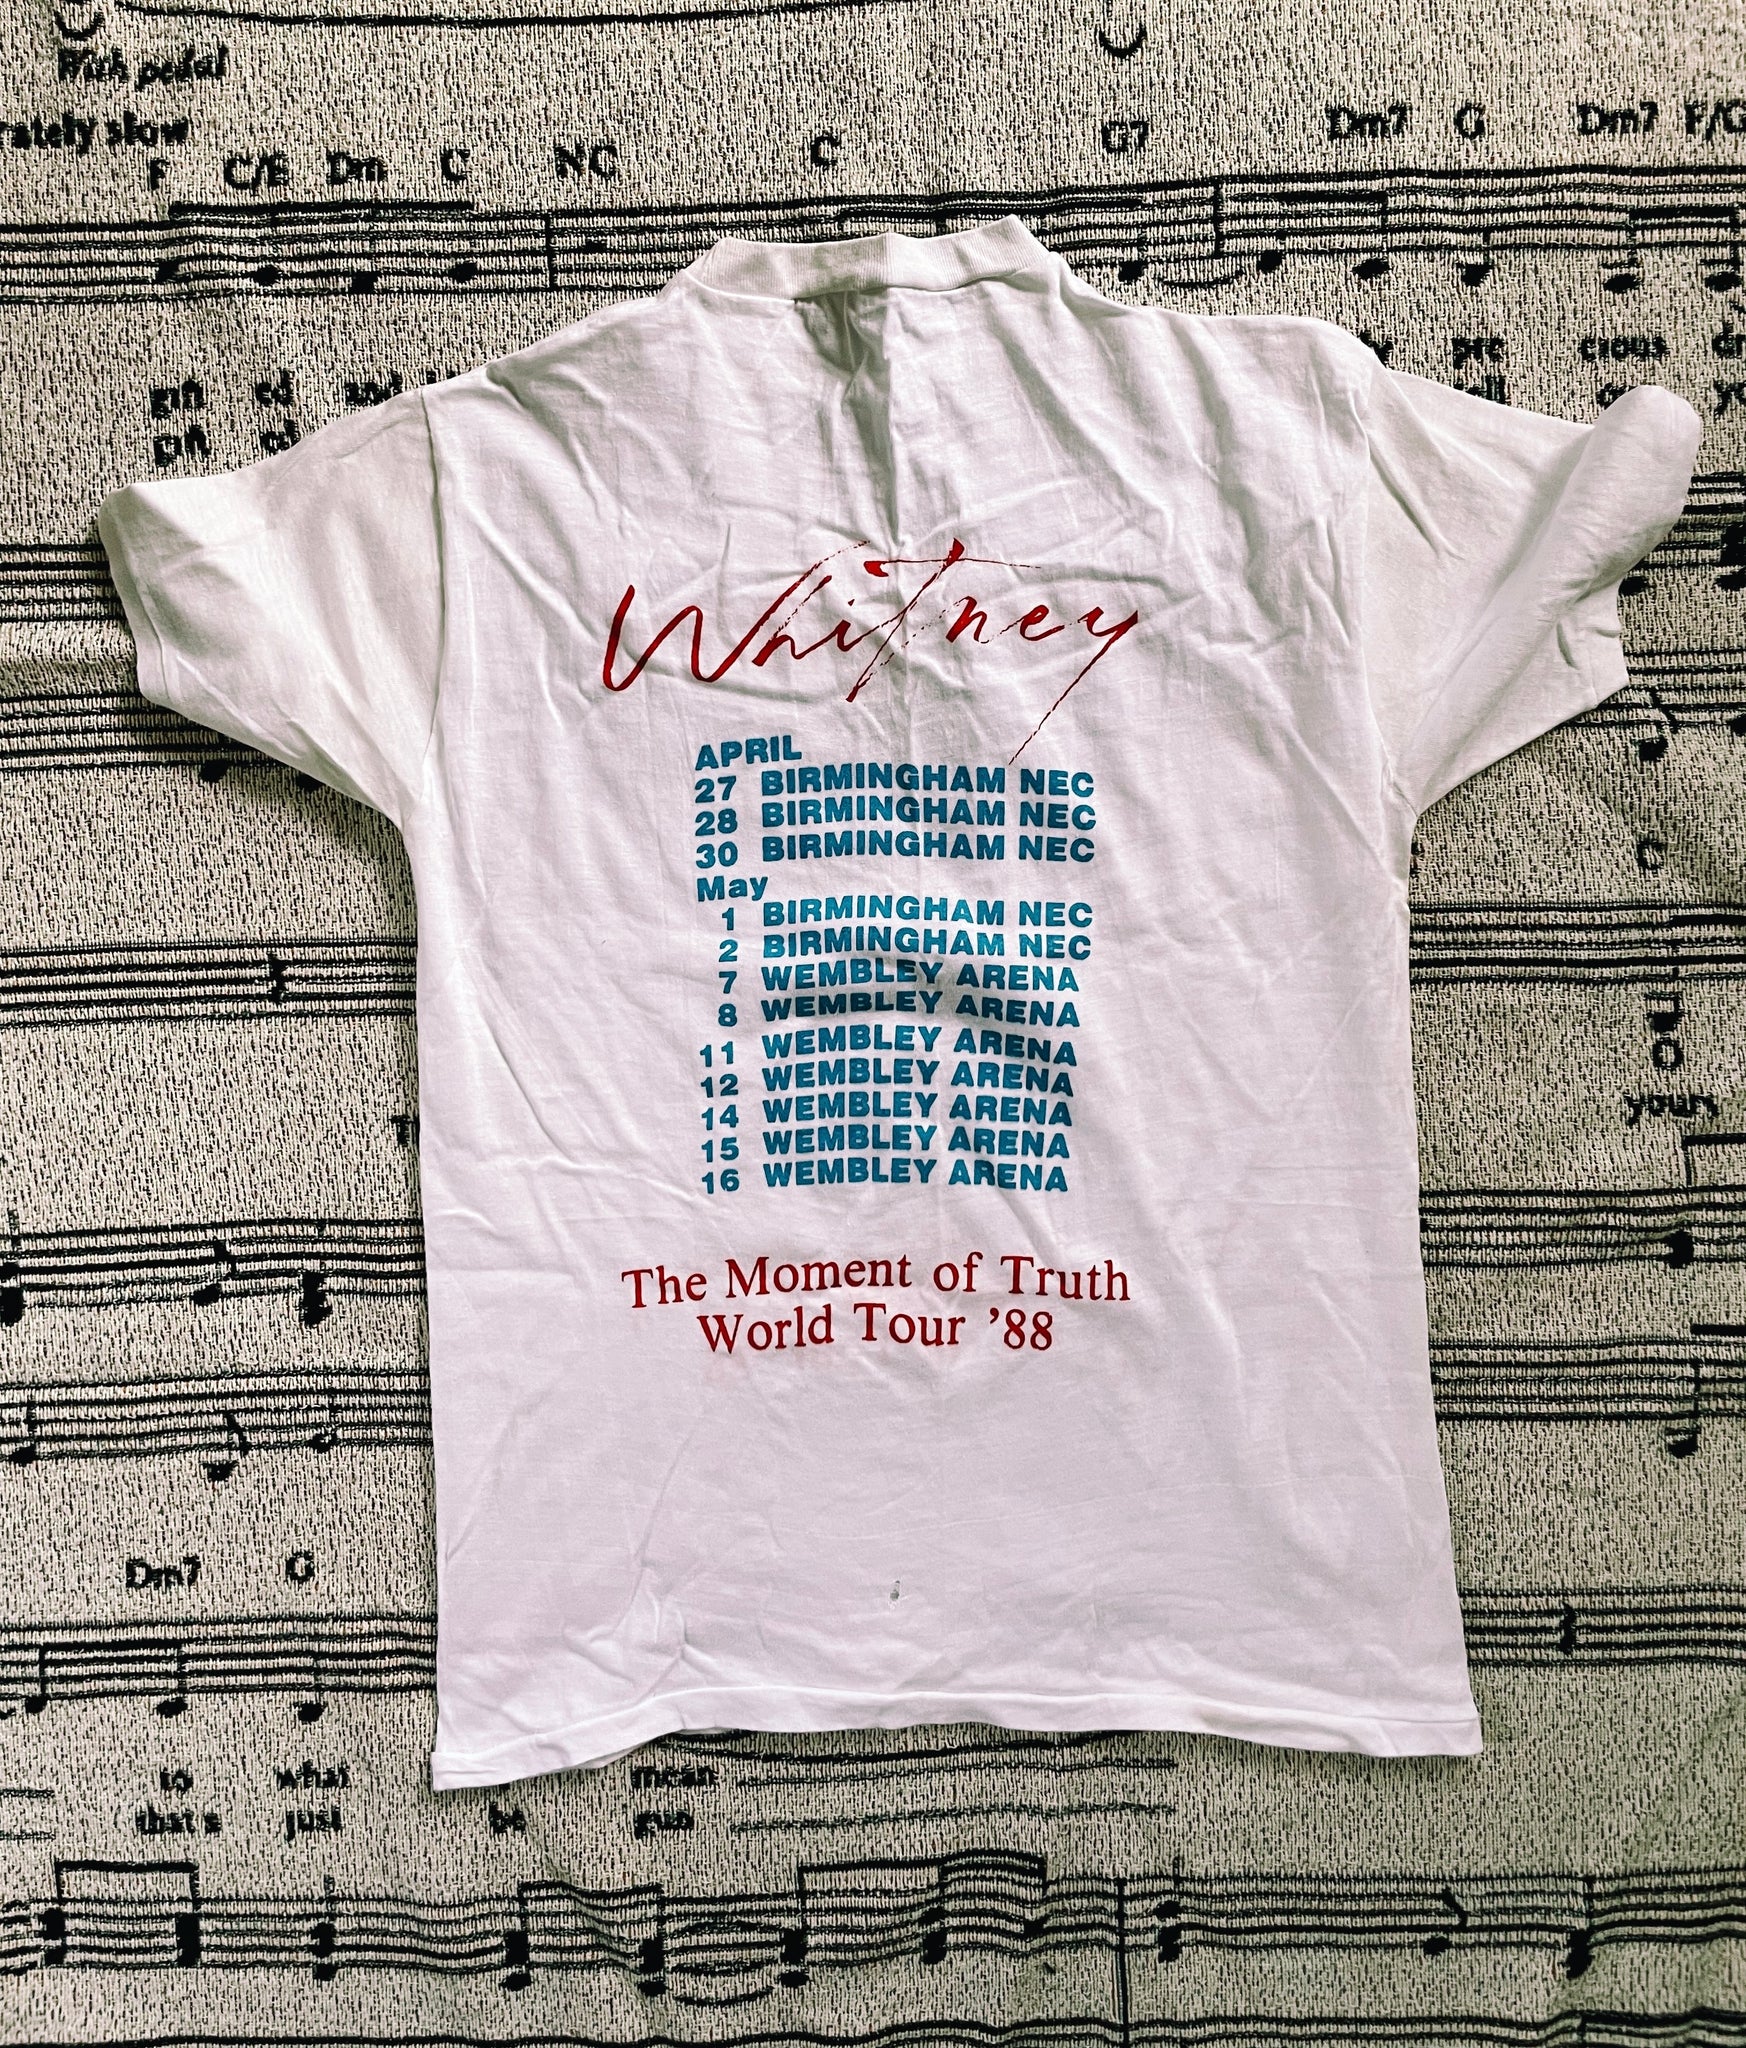 Vintage “Whitney Houston” Concert T-Shirt (1988)